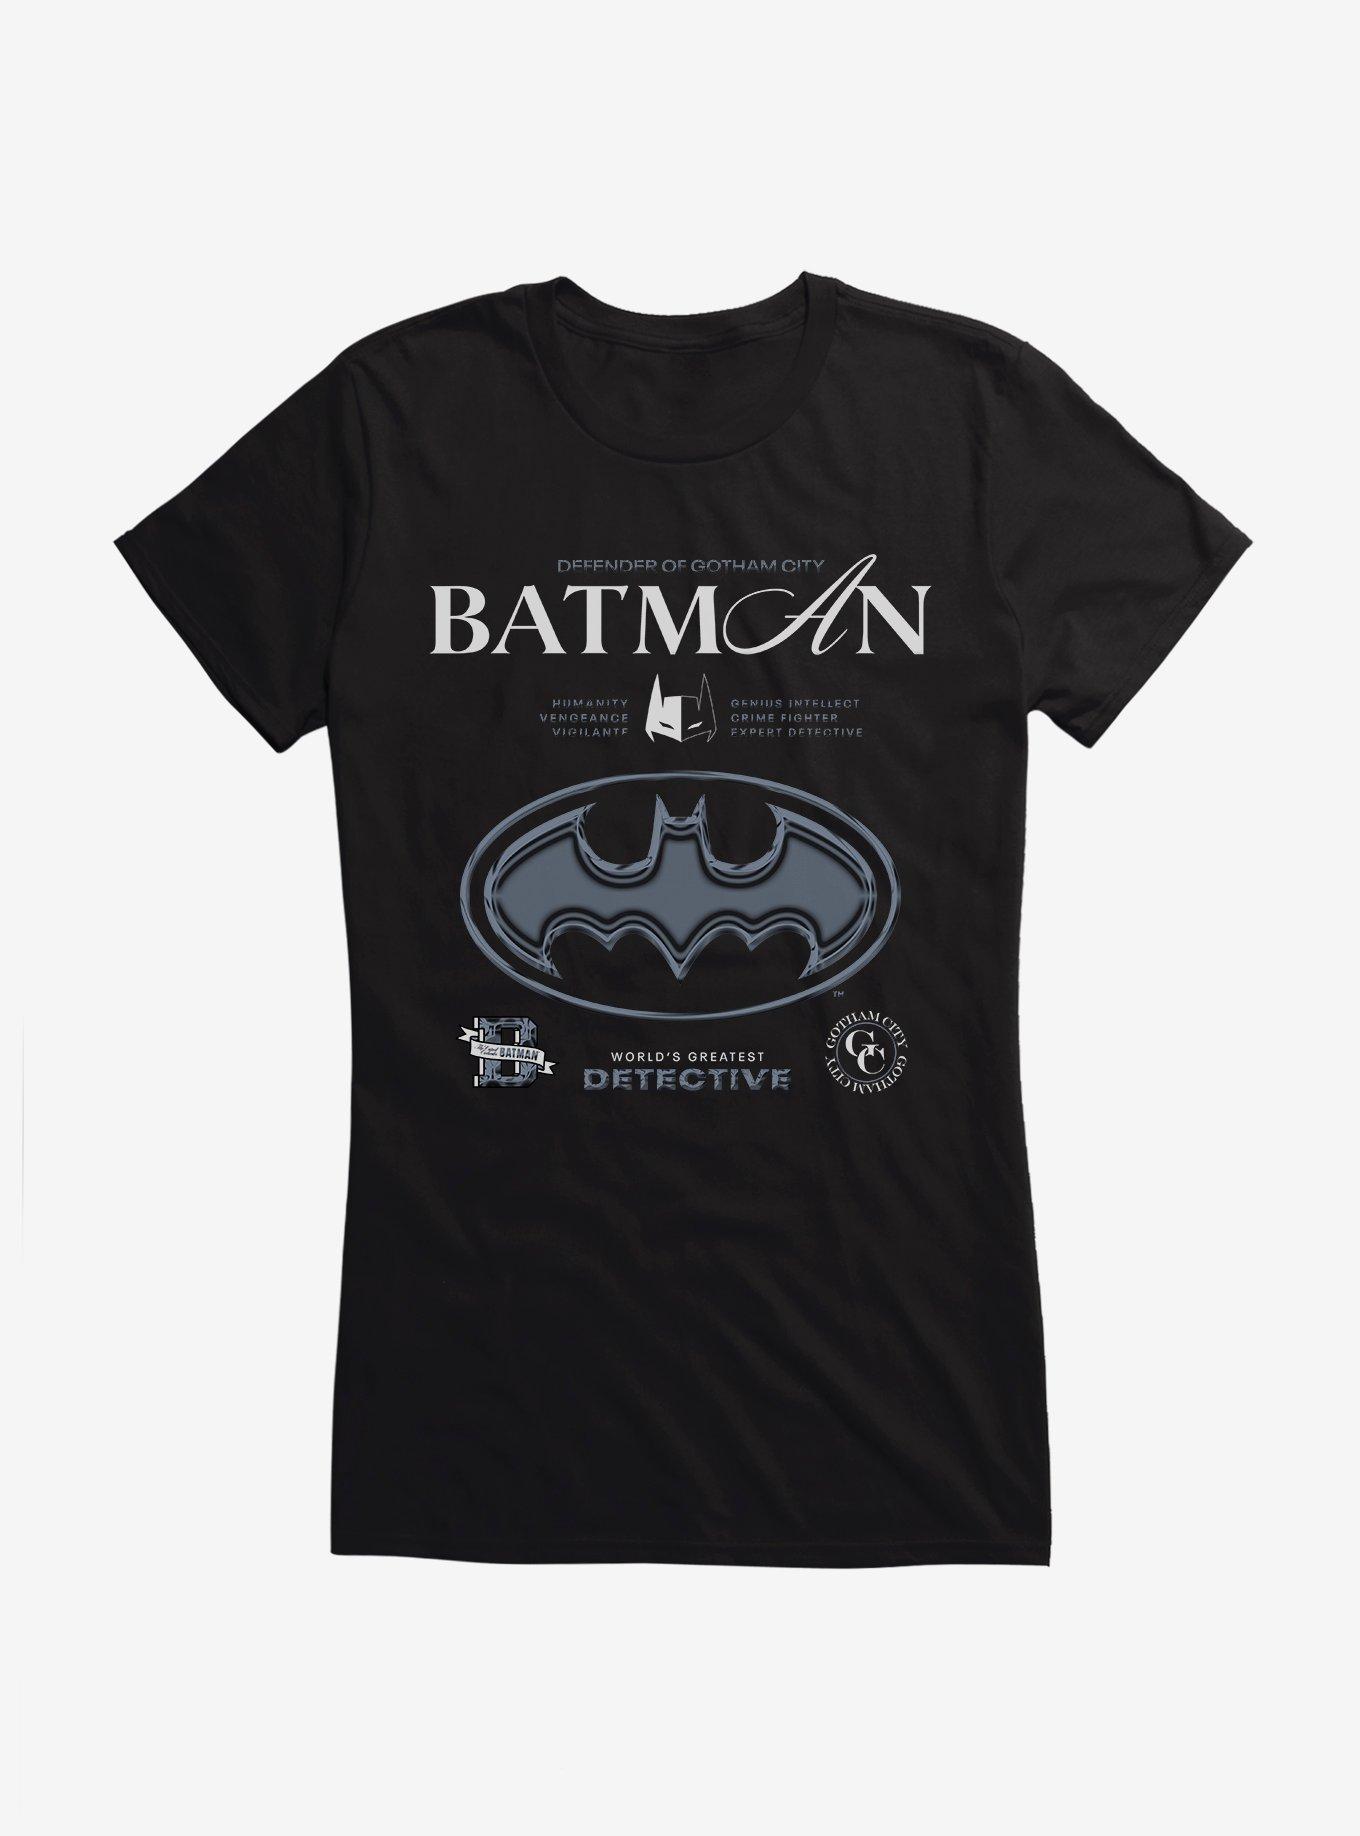 Batman Defender Of Gotham City Girls T-Shirt